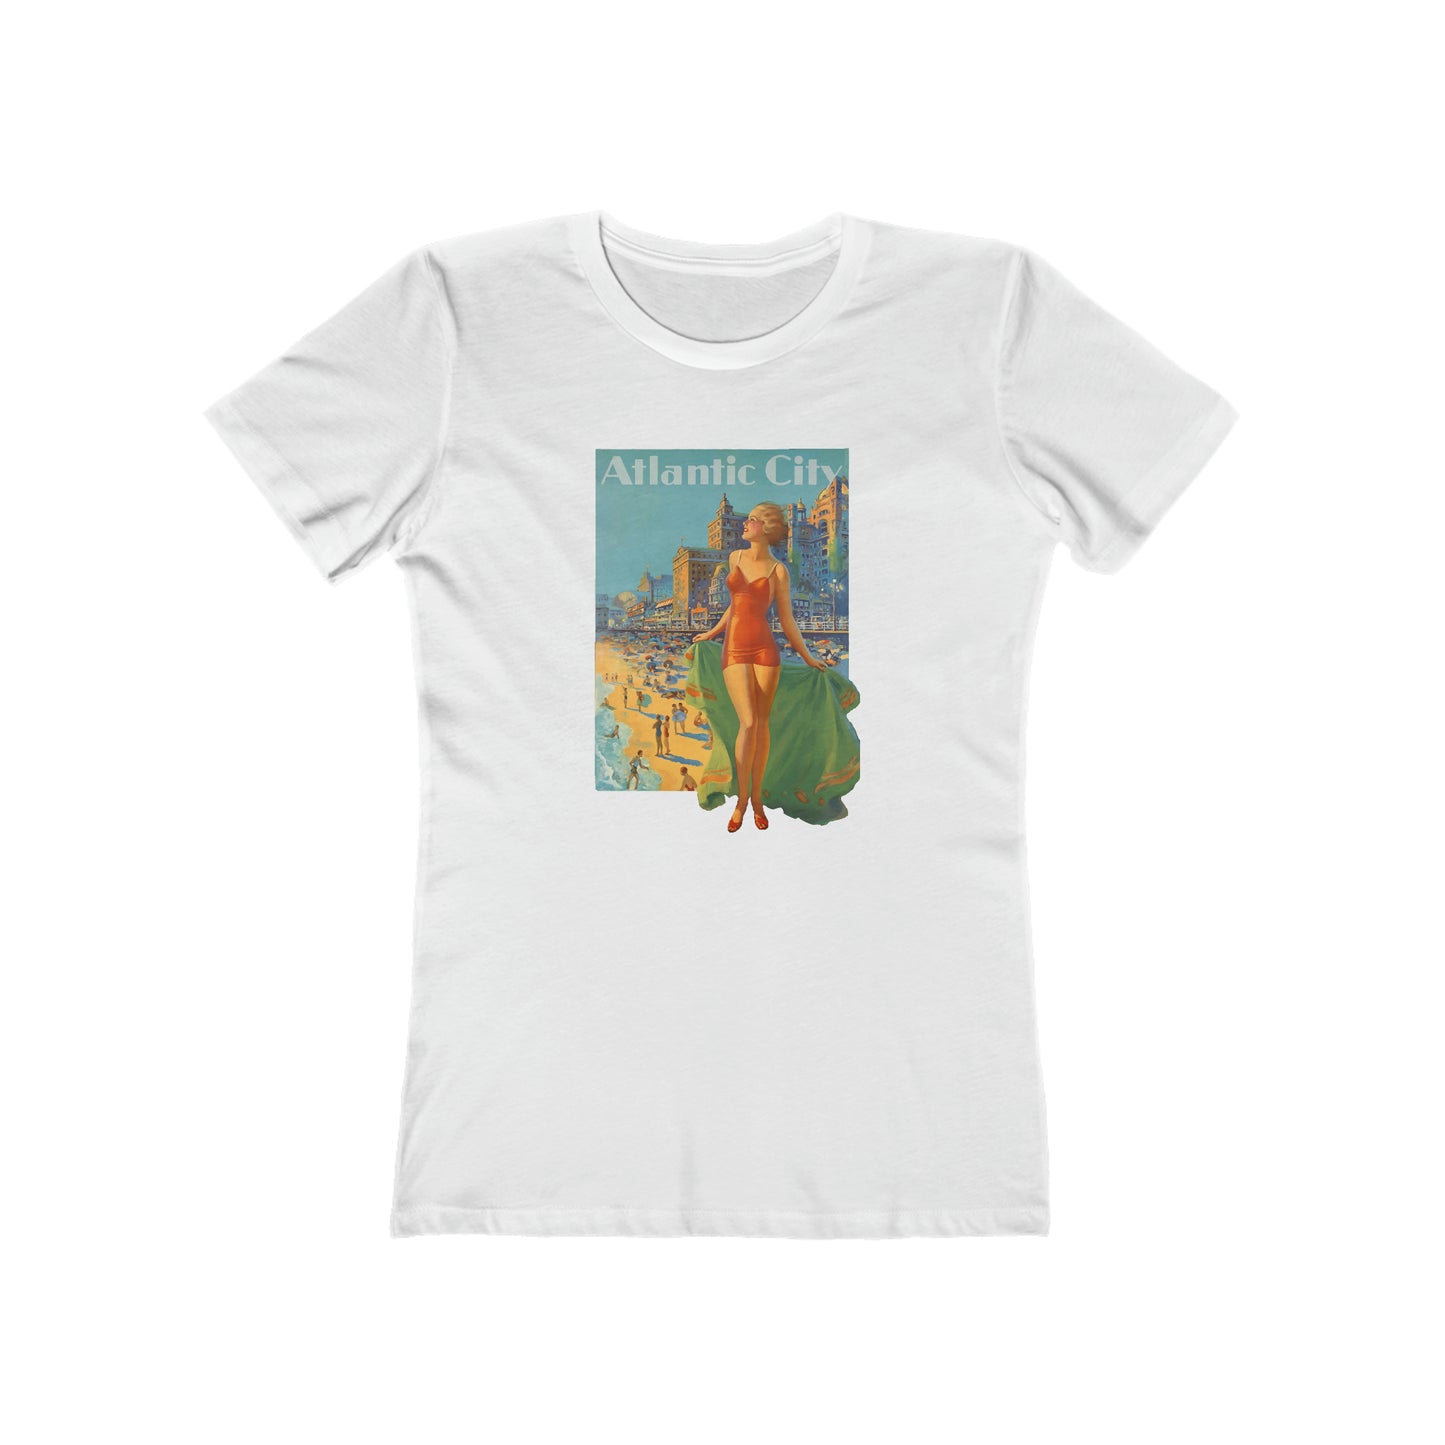 Atlantic City - Women's T-Shirt